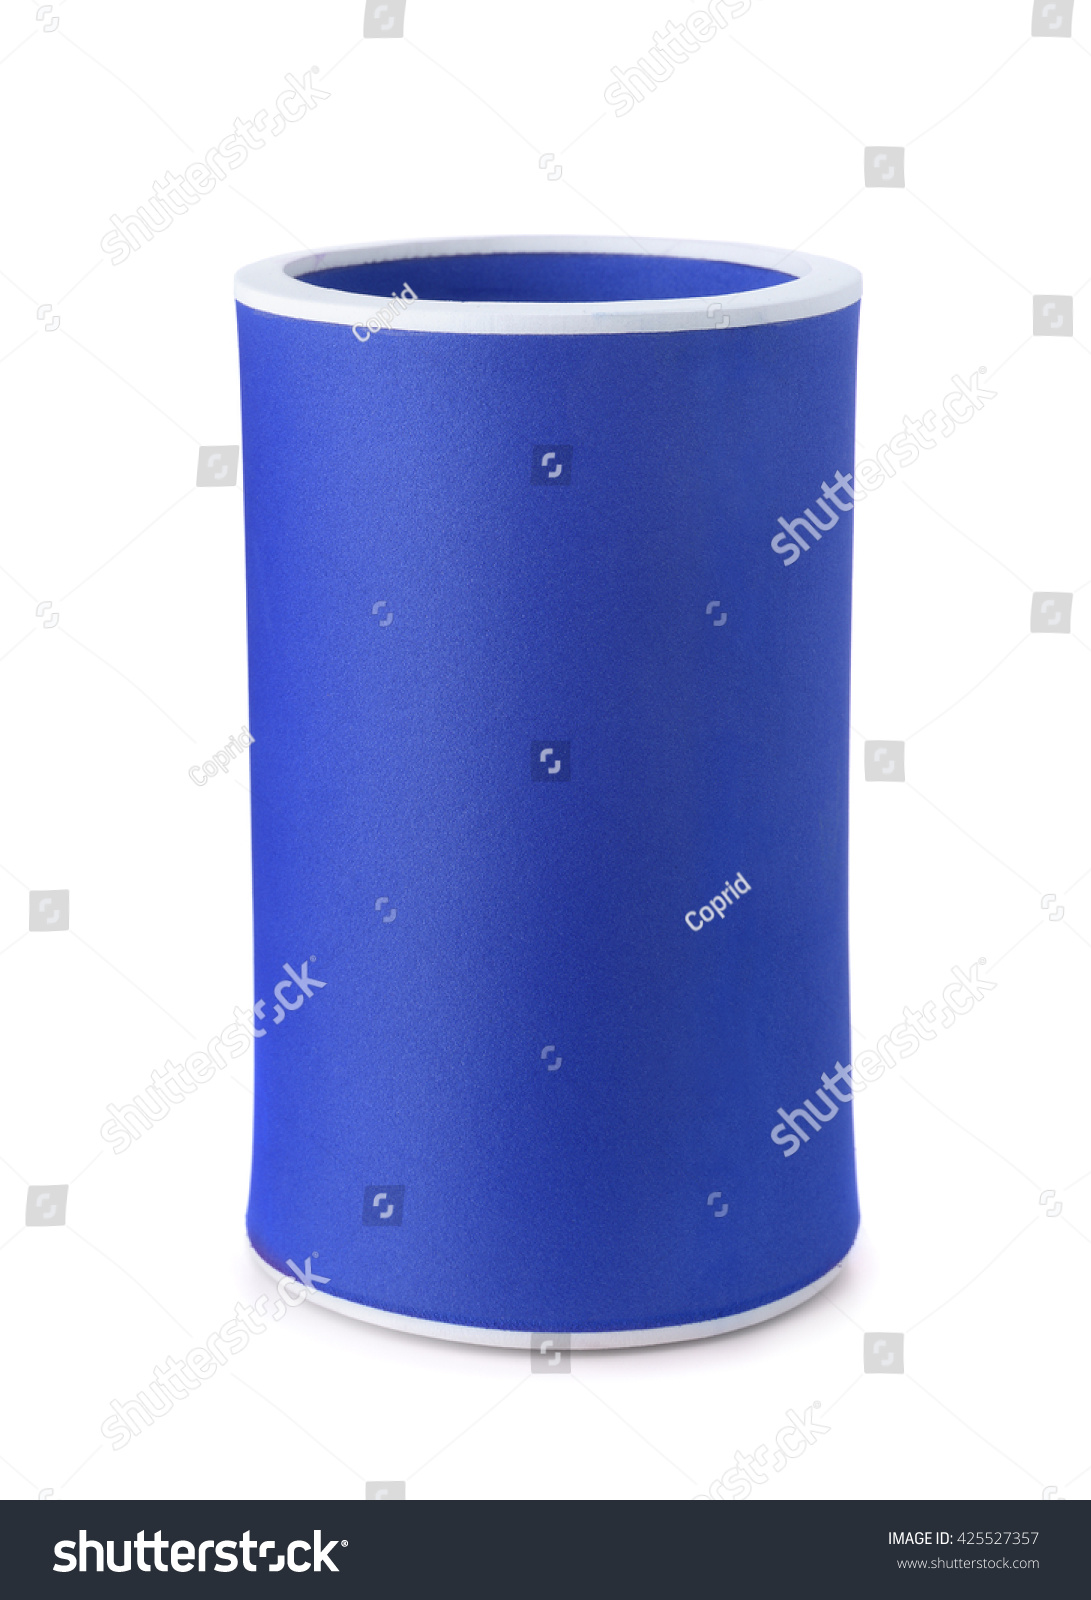 Download Blue Foam Koozie Drink Holder Isolated Stock Photo 425527357 - Shutterstock